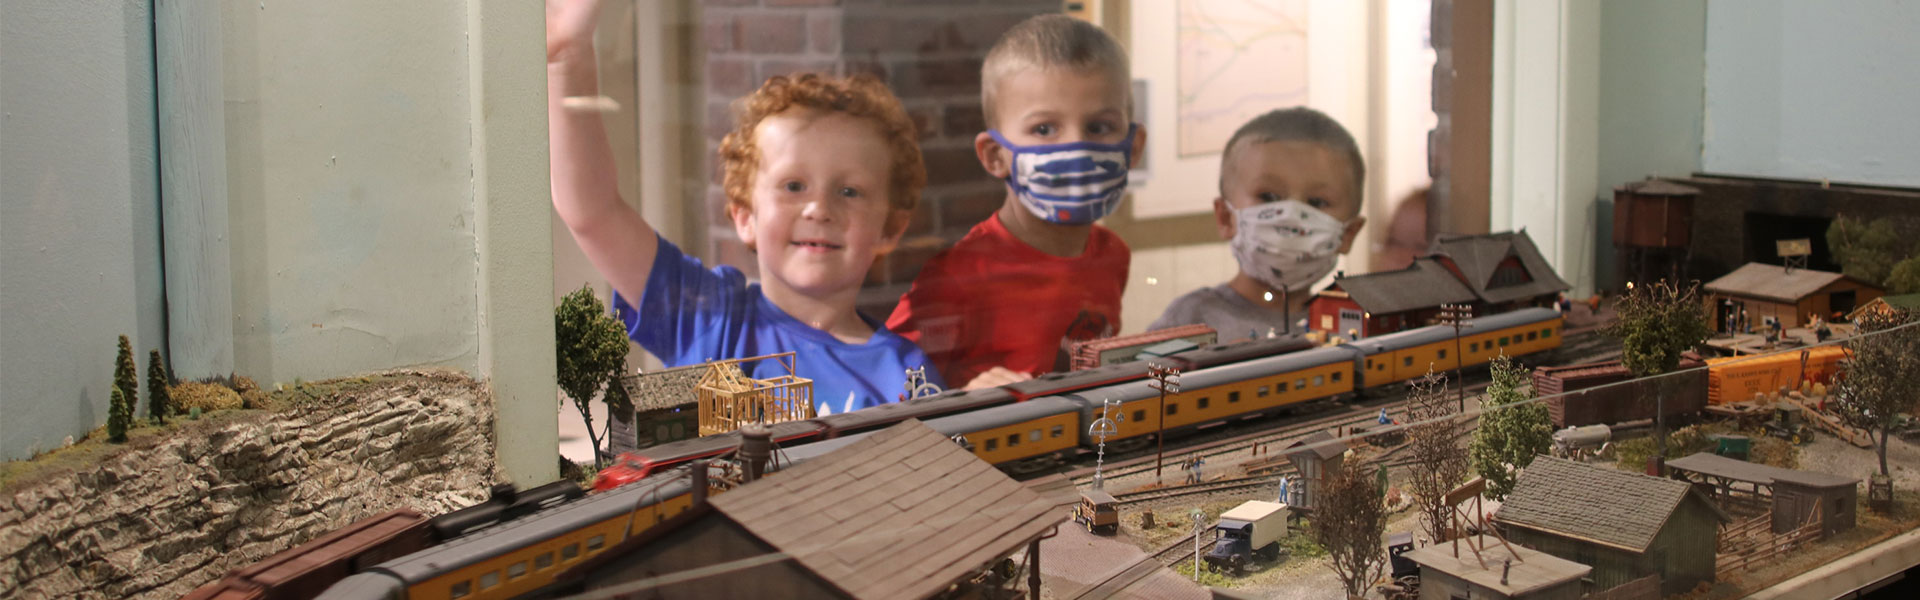 3 little boys watching model trains